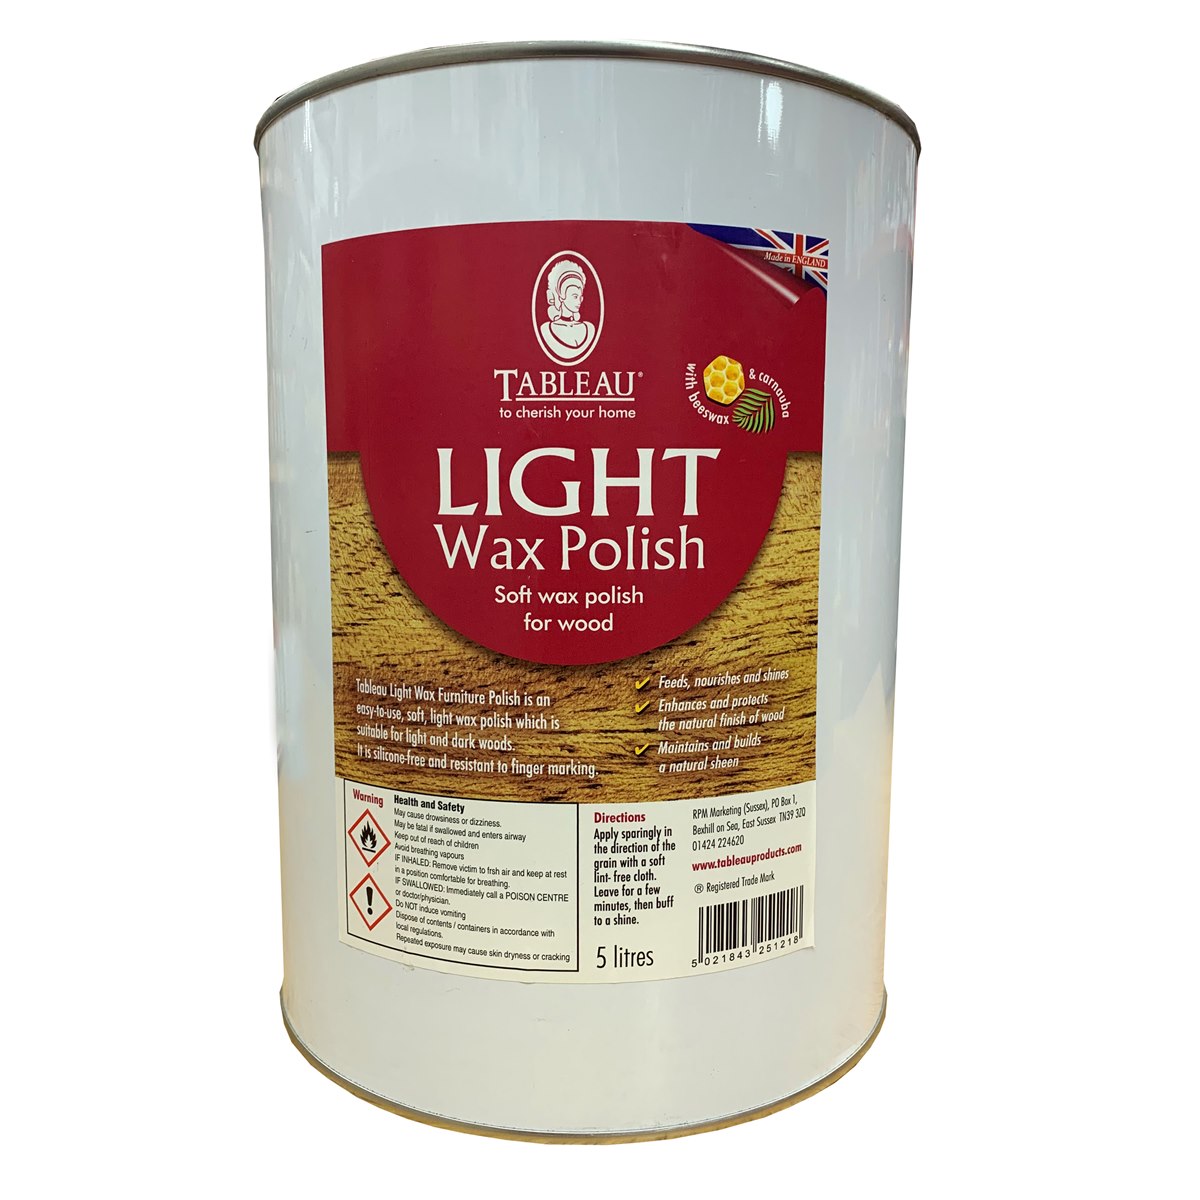 Tableau Light Wax Polish 5 Litre